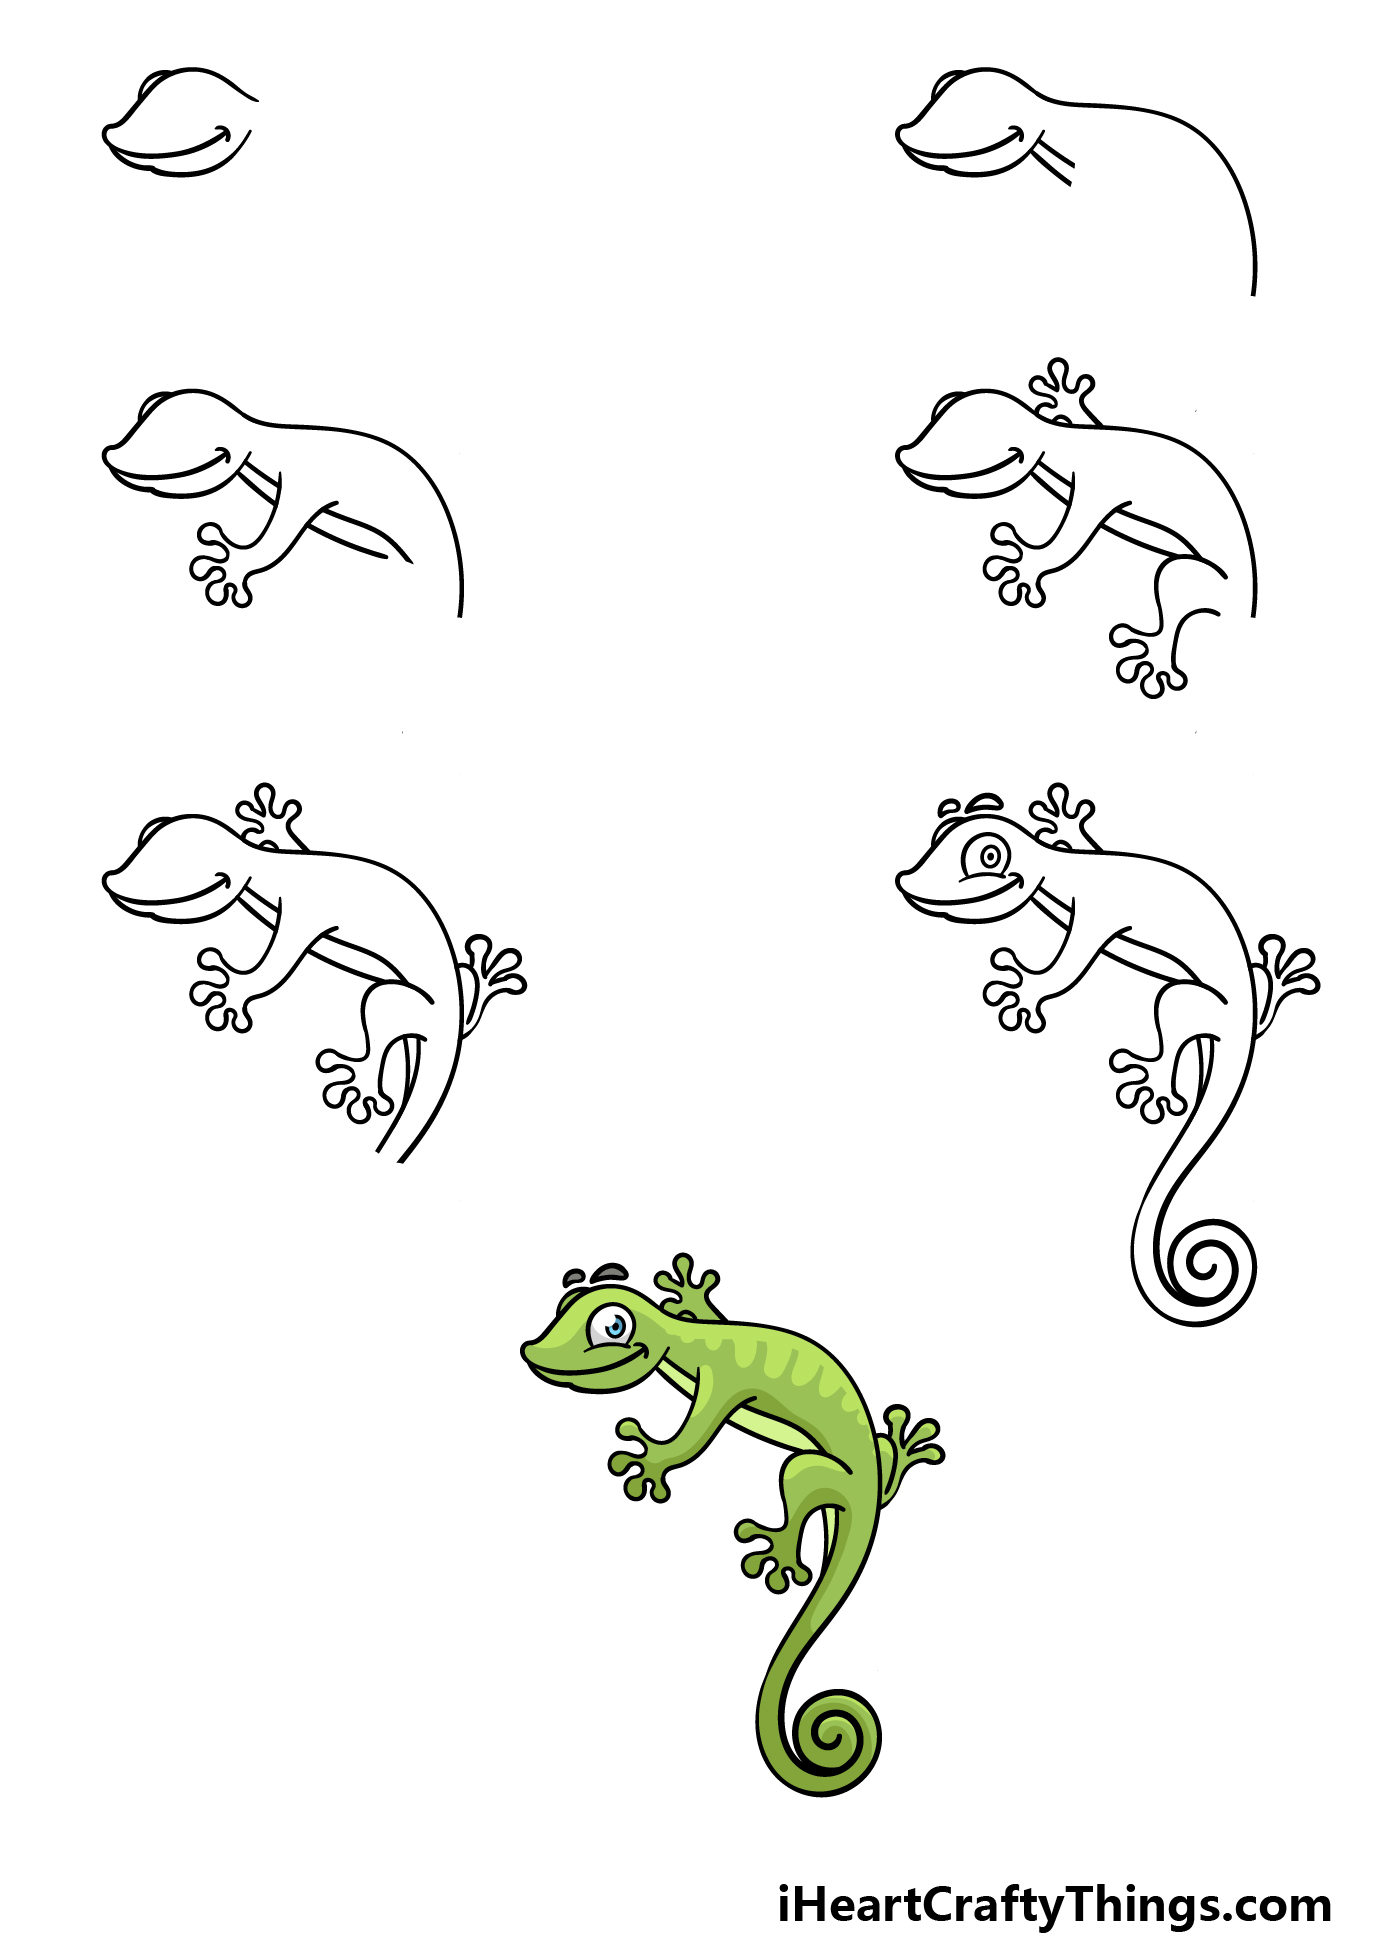 how to draw a cartoon lizard in 7 steps